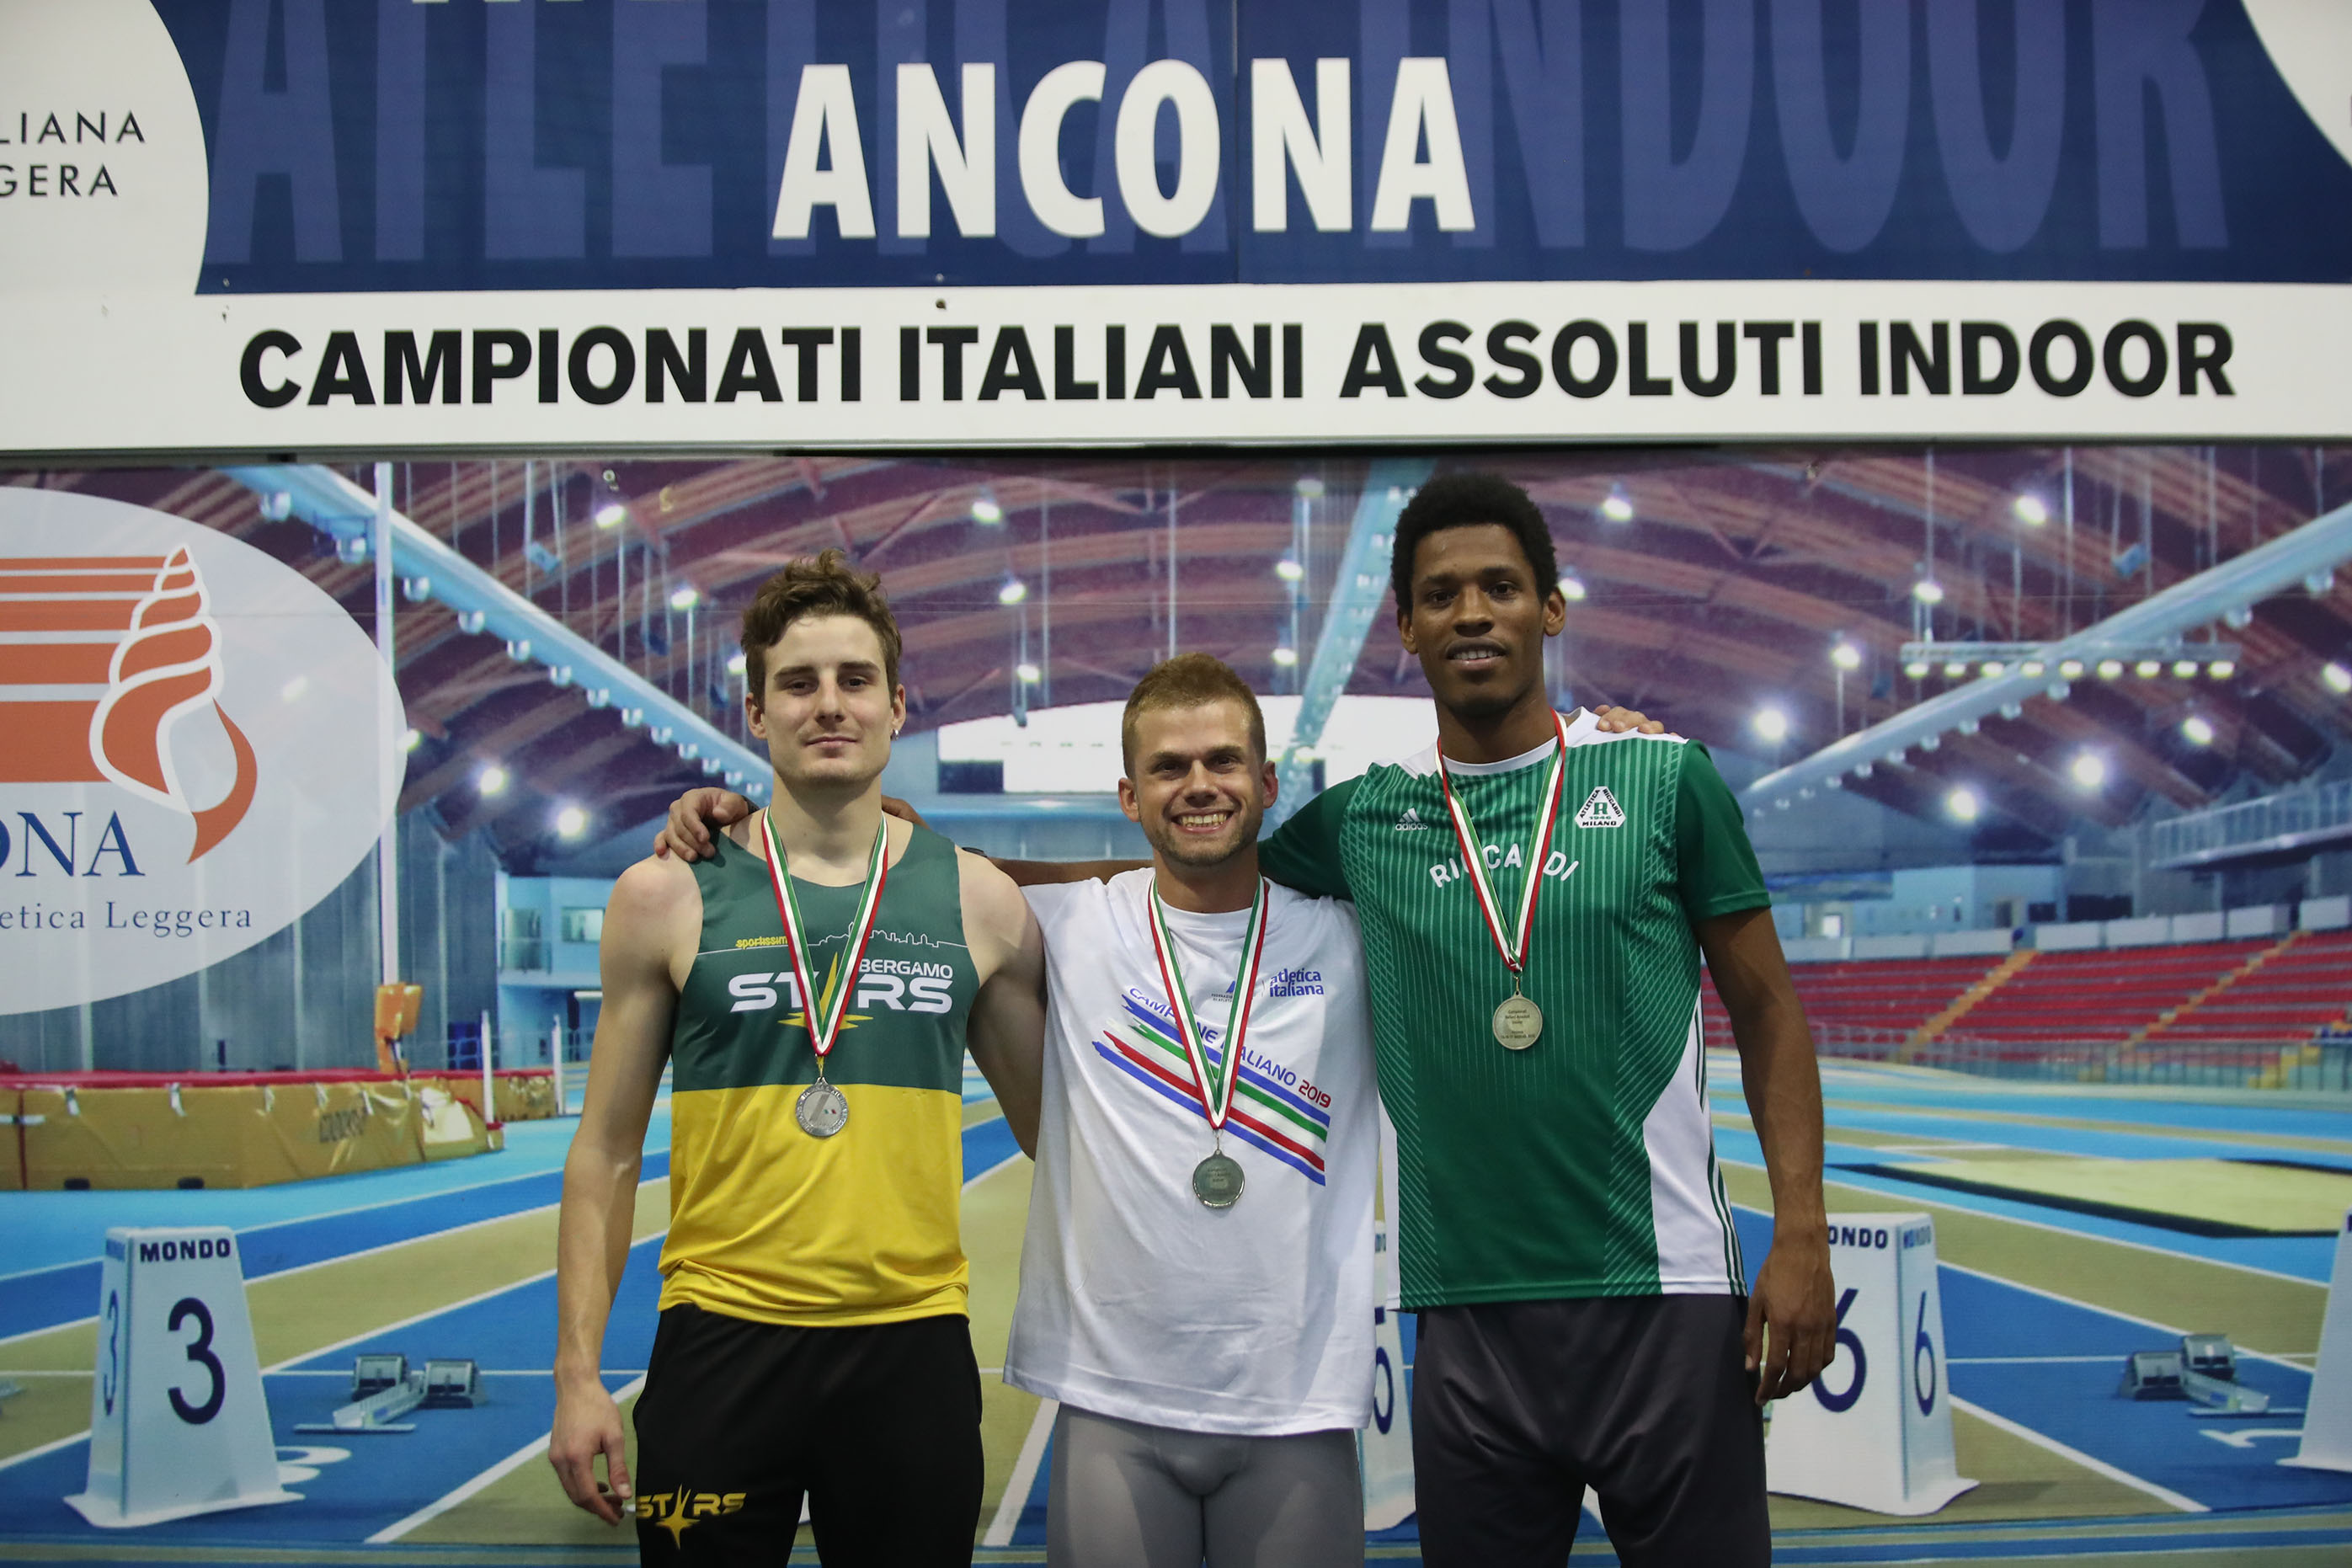 Wanderson Polanco Ancona 2019 Ass podio